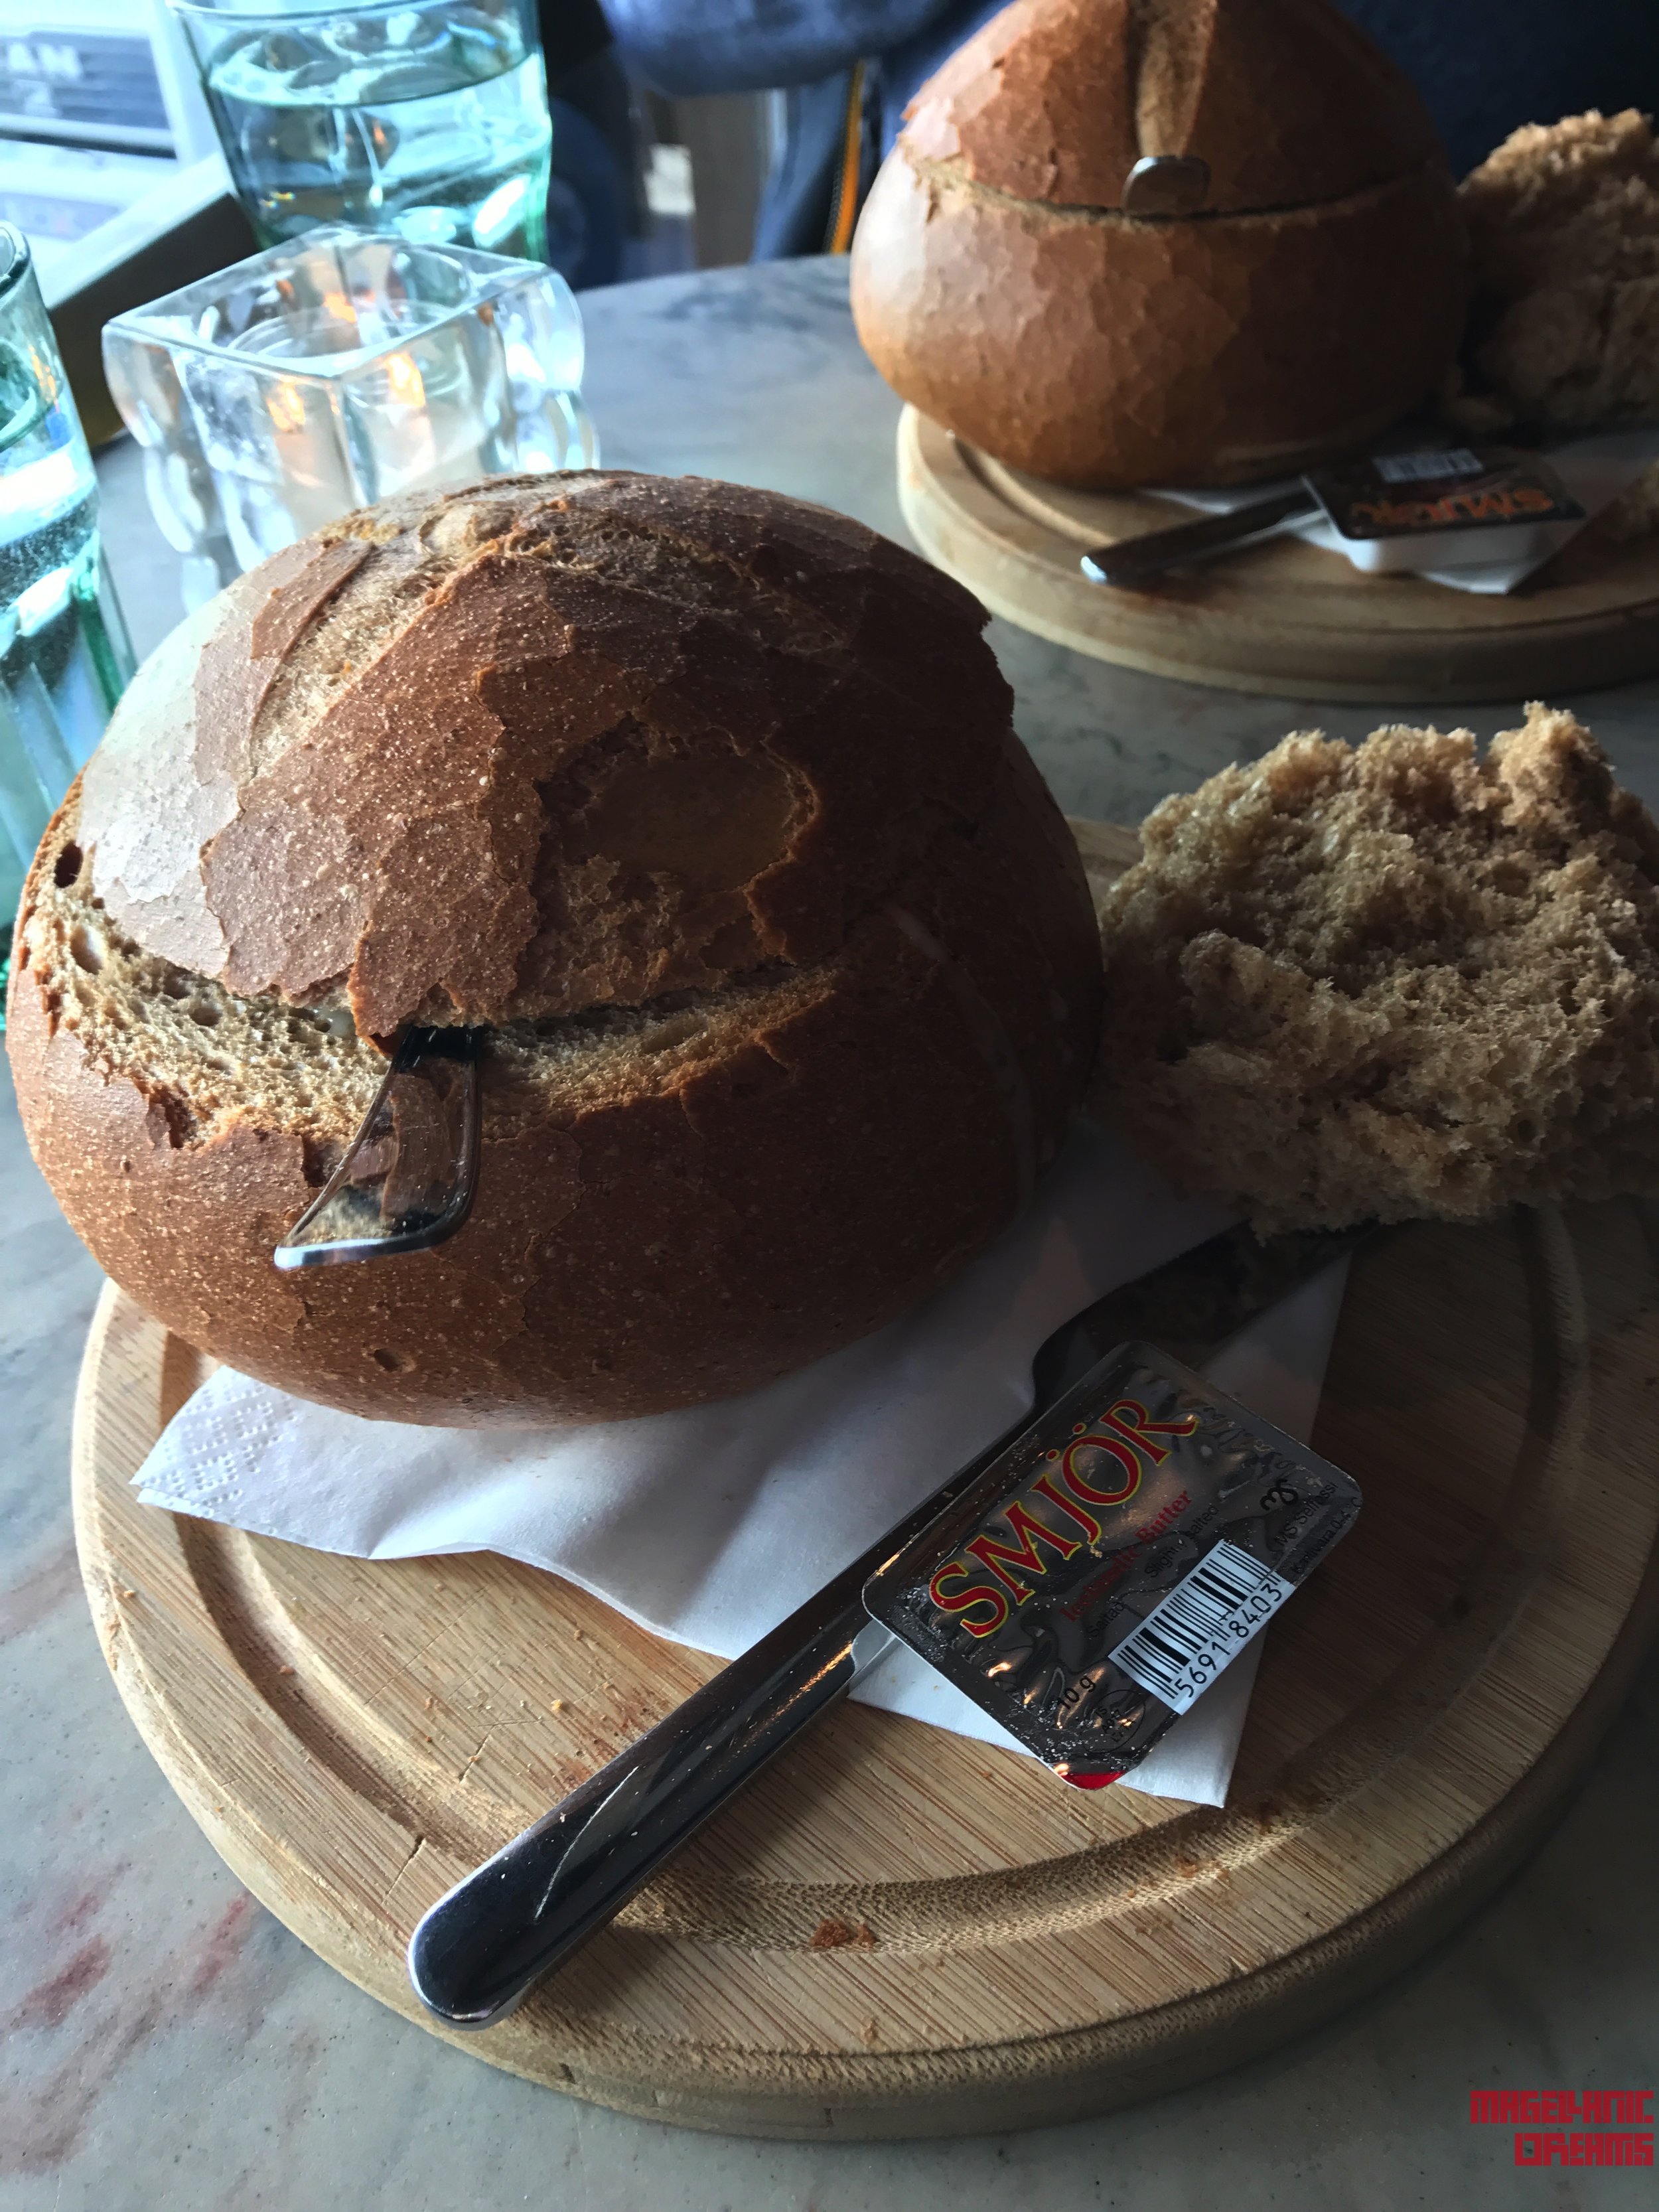 Soup in Bread at Svarta Kaffid